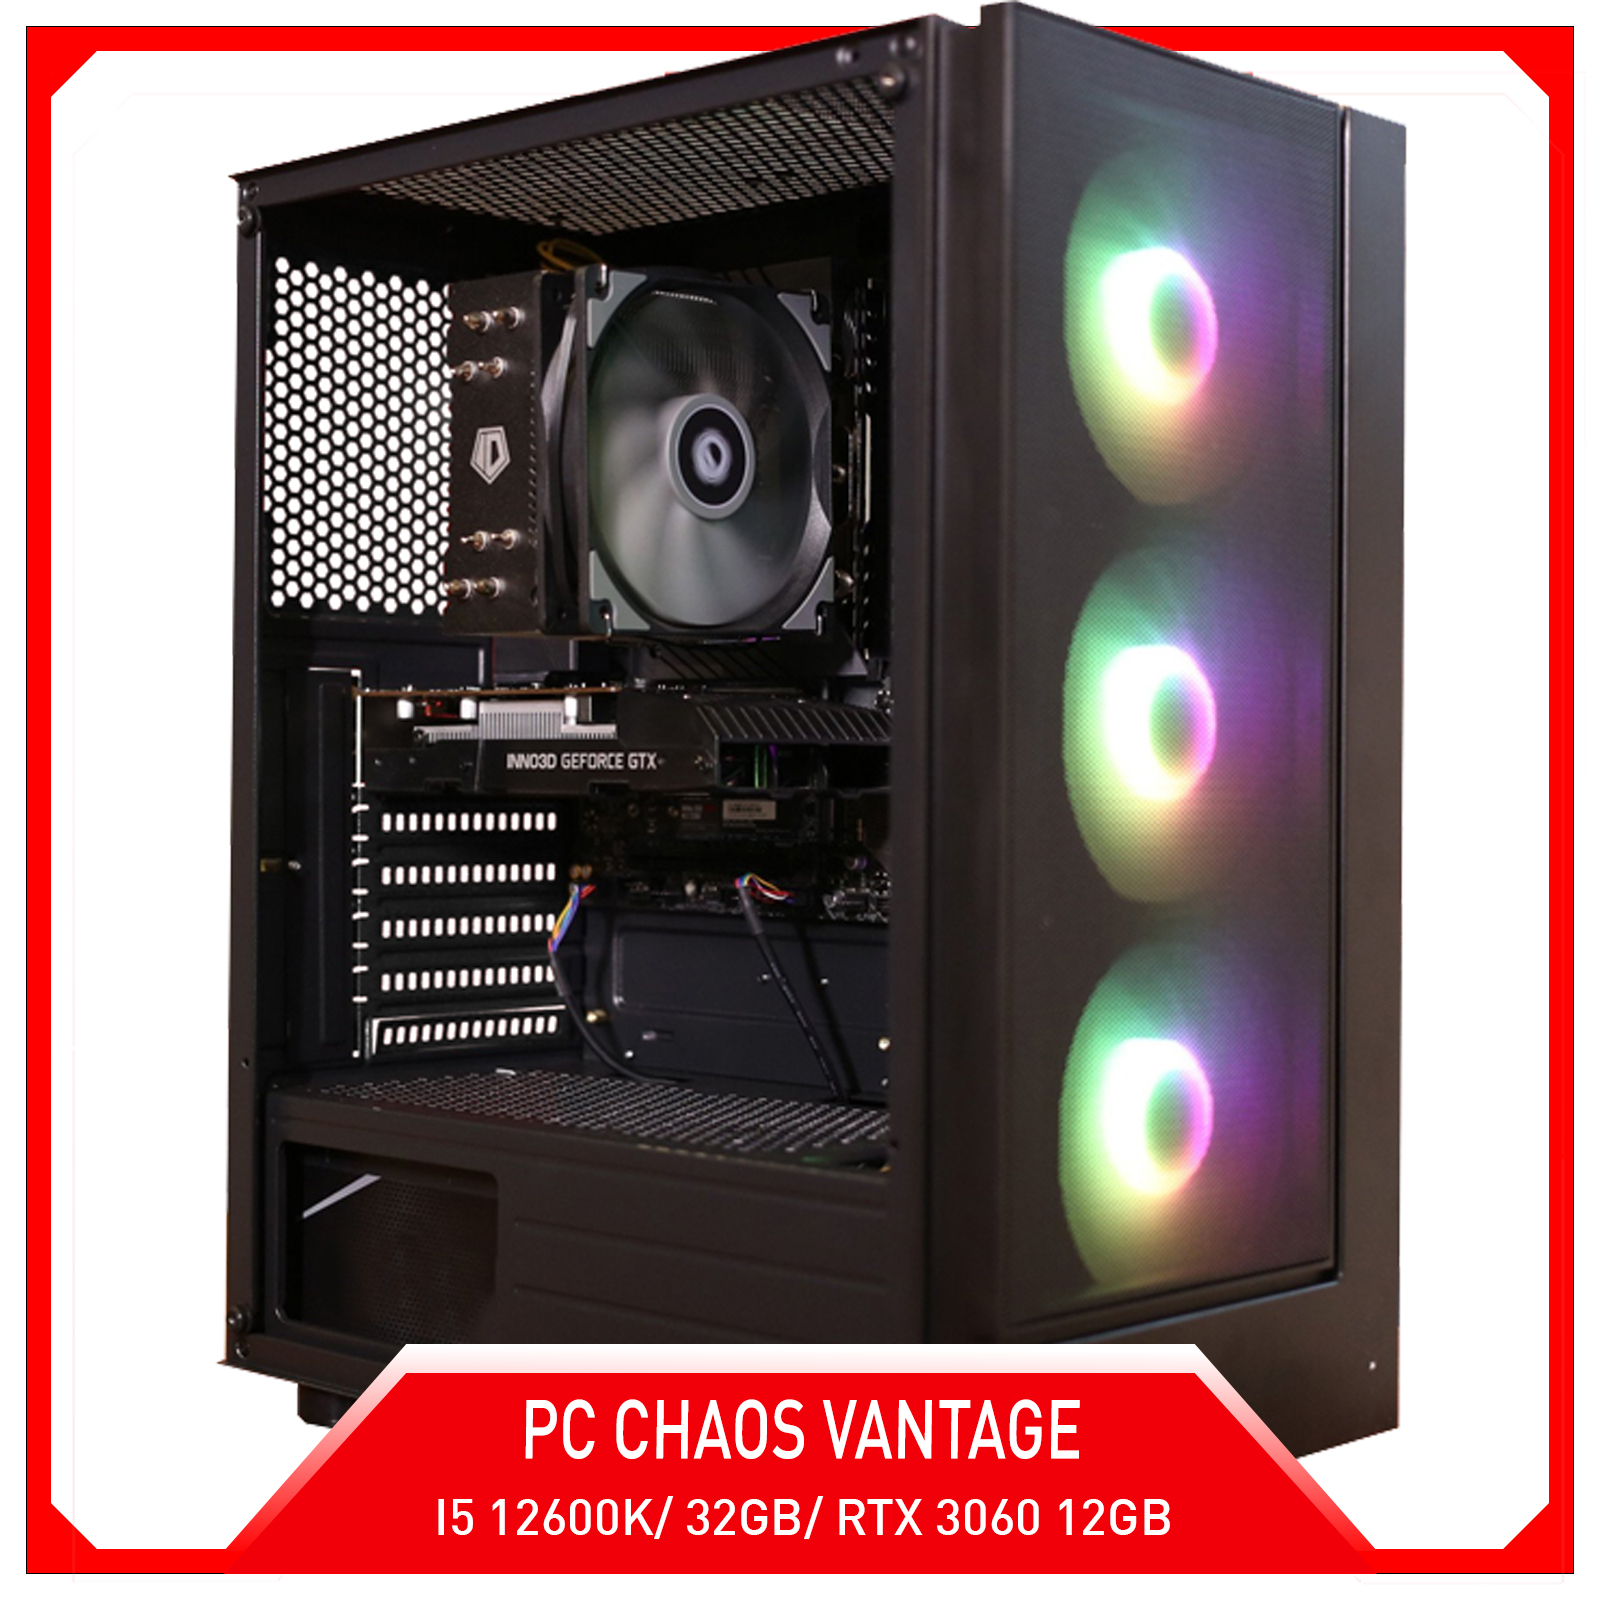 PC Chaos Vantage I5 12600K/ 32GB/ RTX 3060 12GB